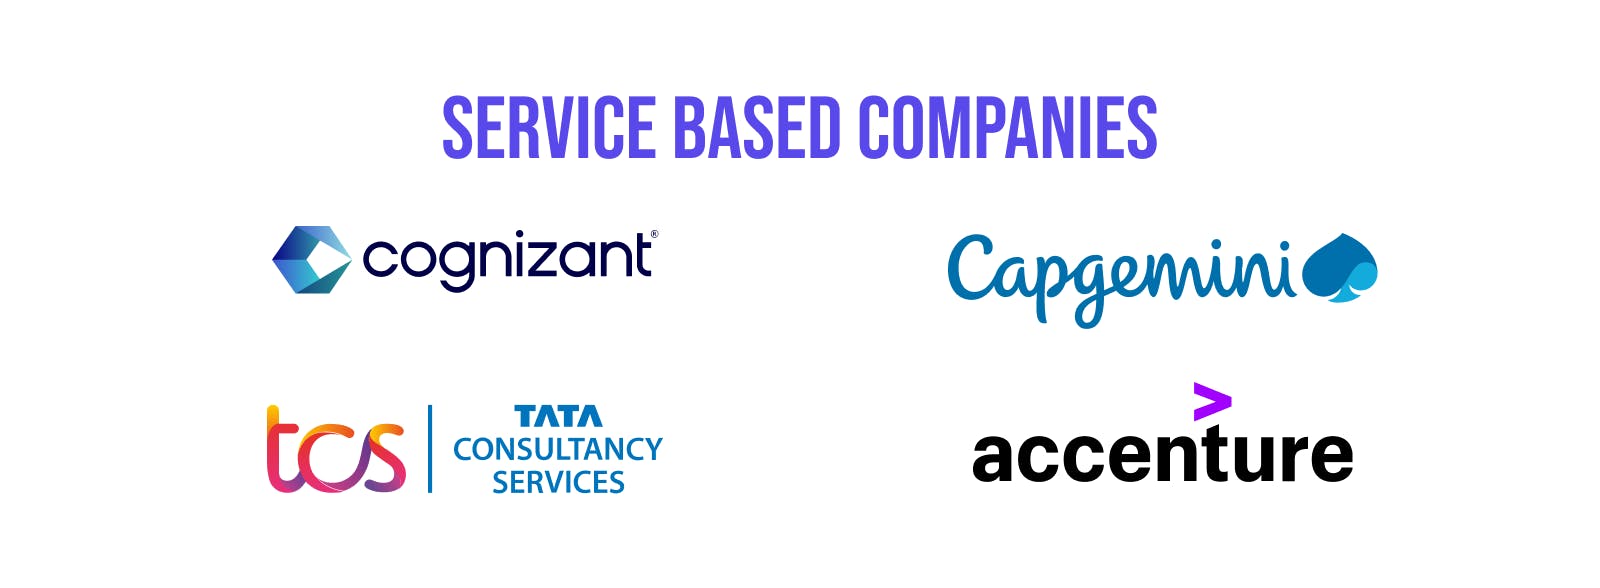 List of Service Based Companies